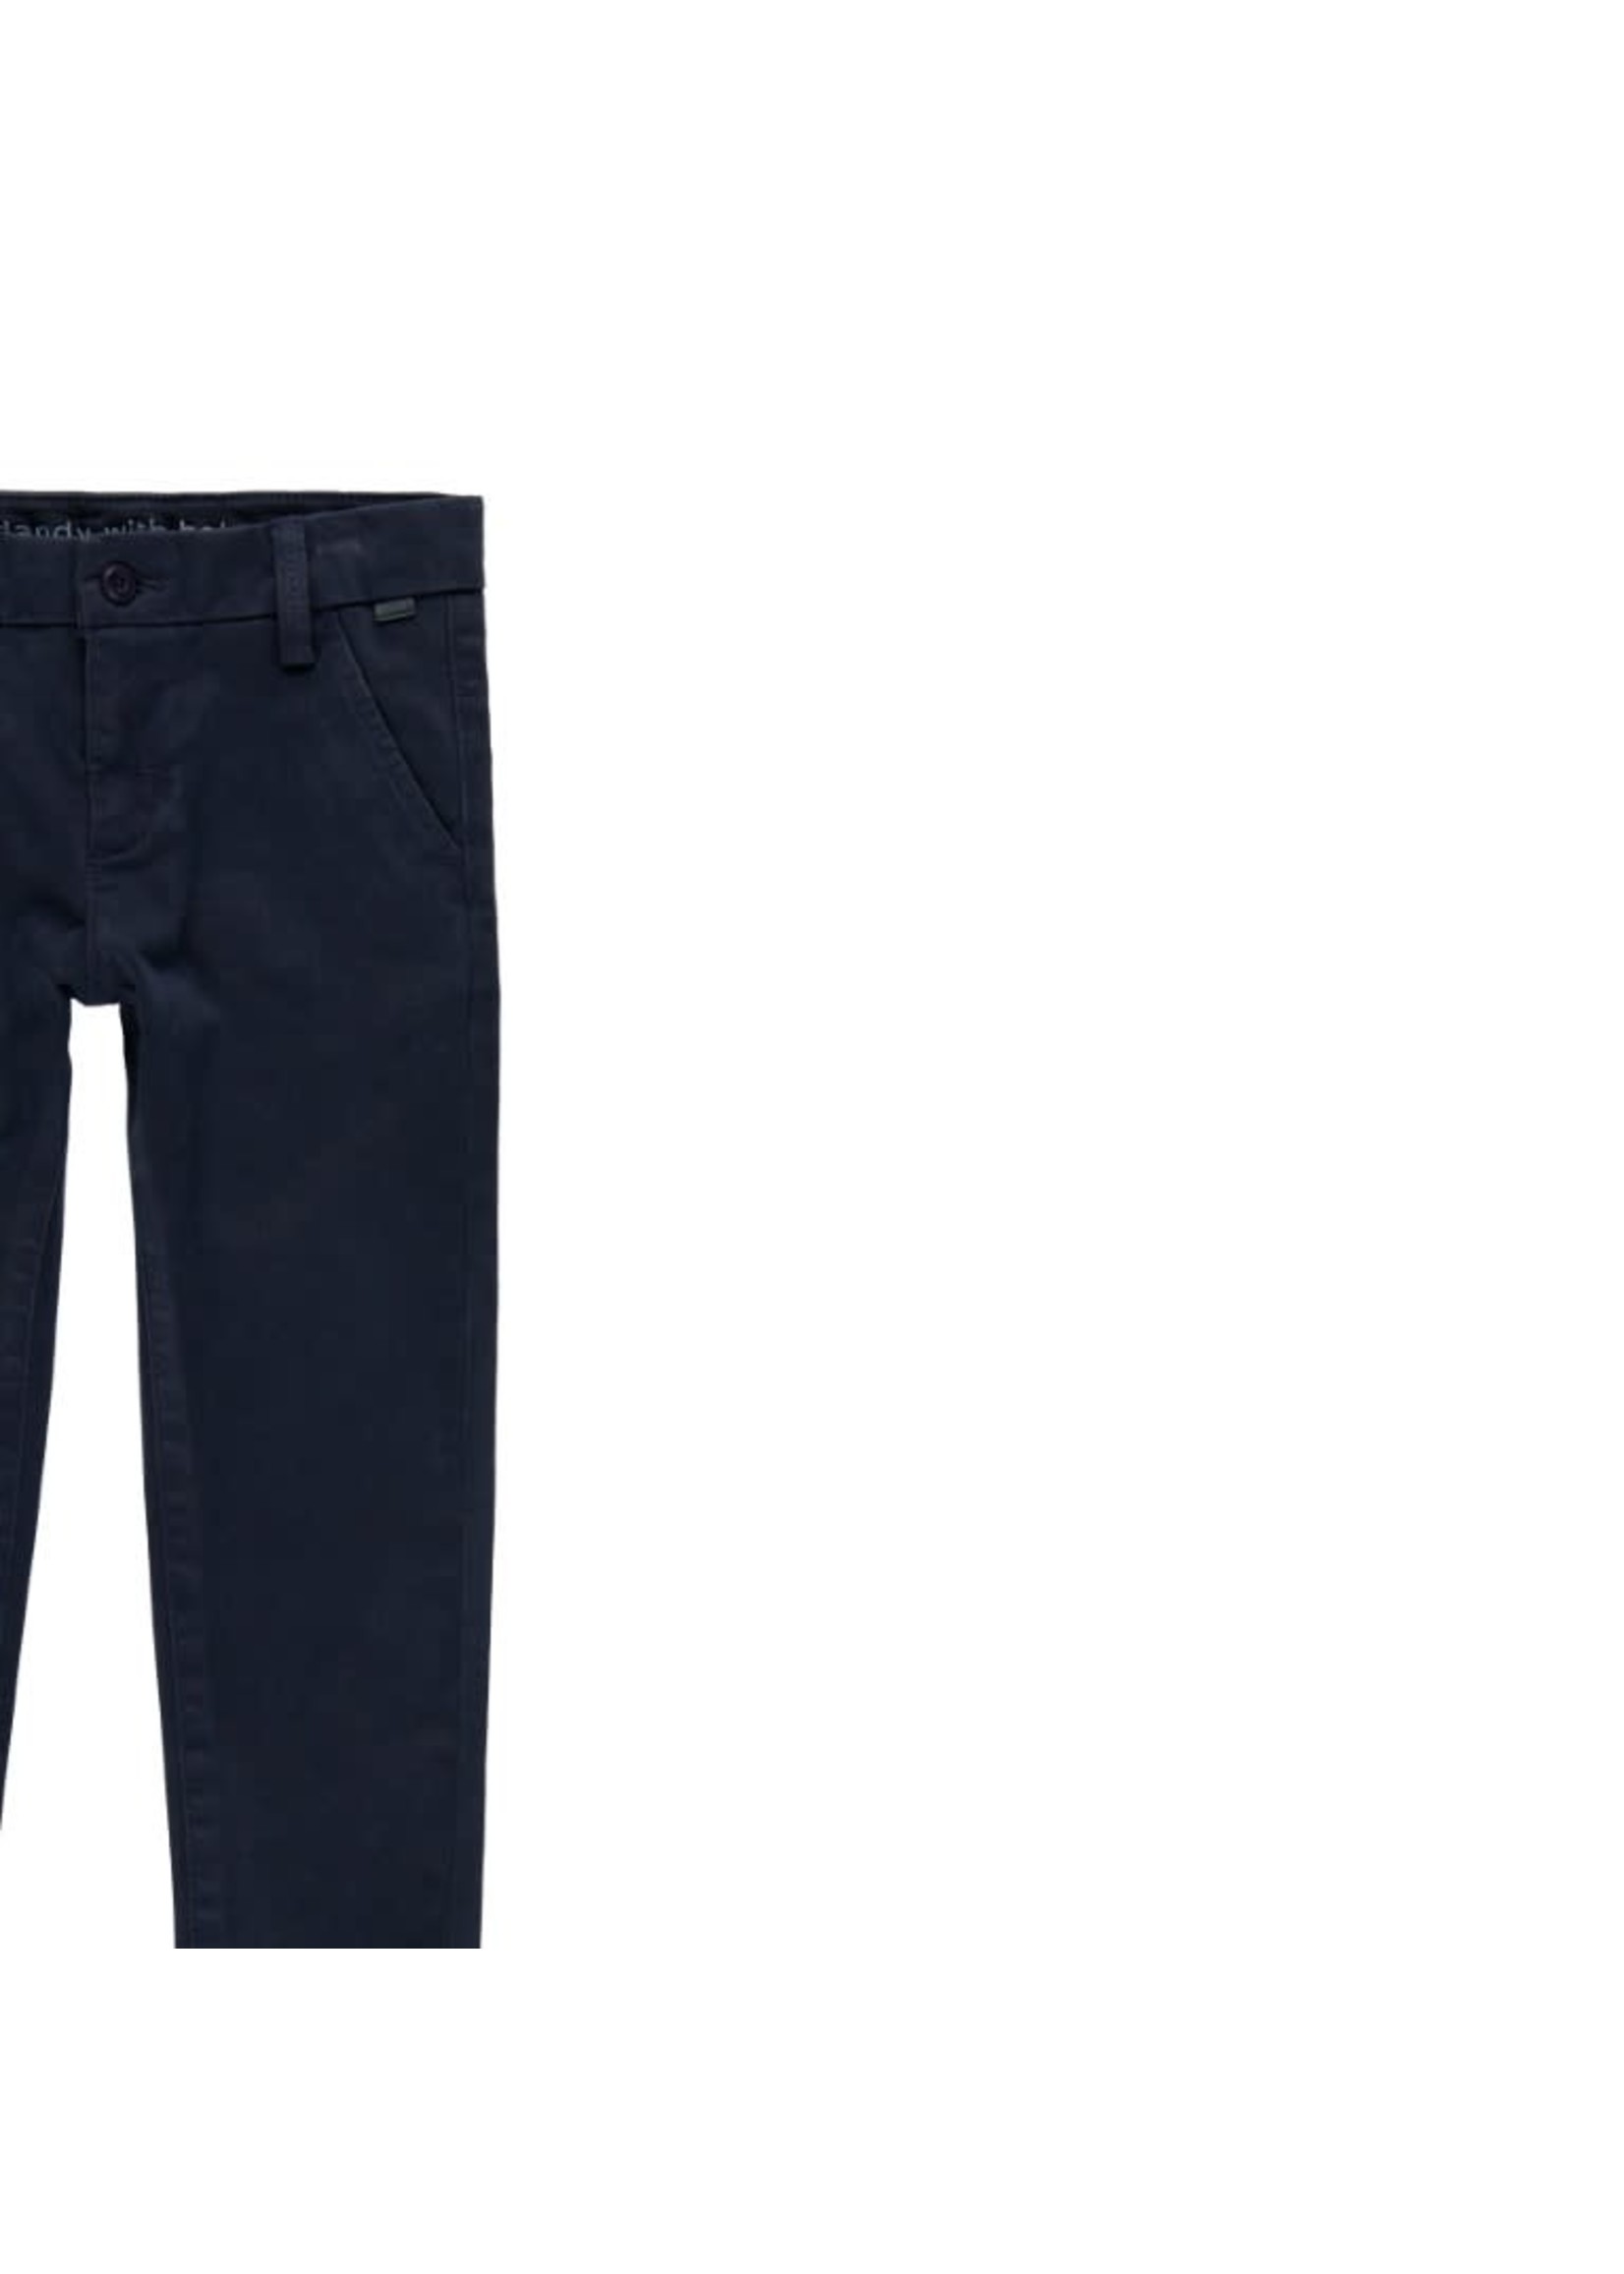 Boboli Boboli Stretch satin trousers for boy navy 735195